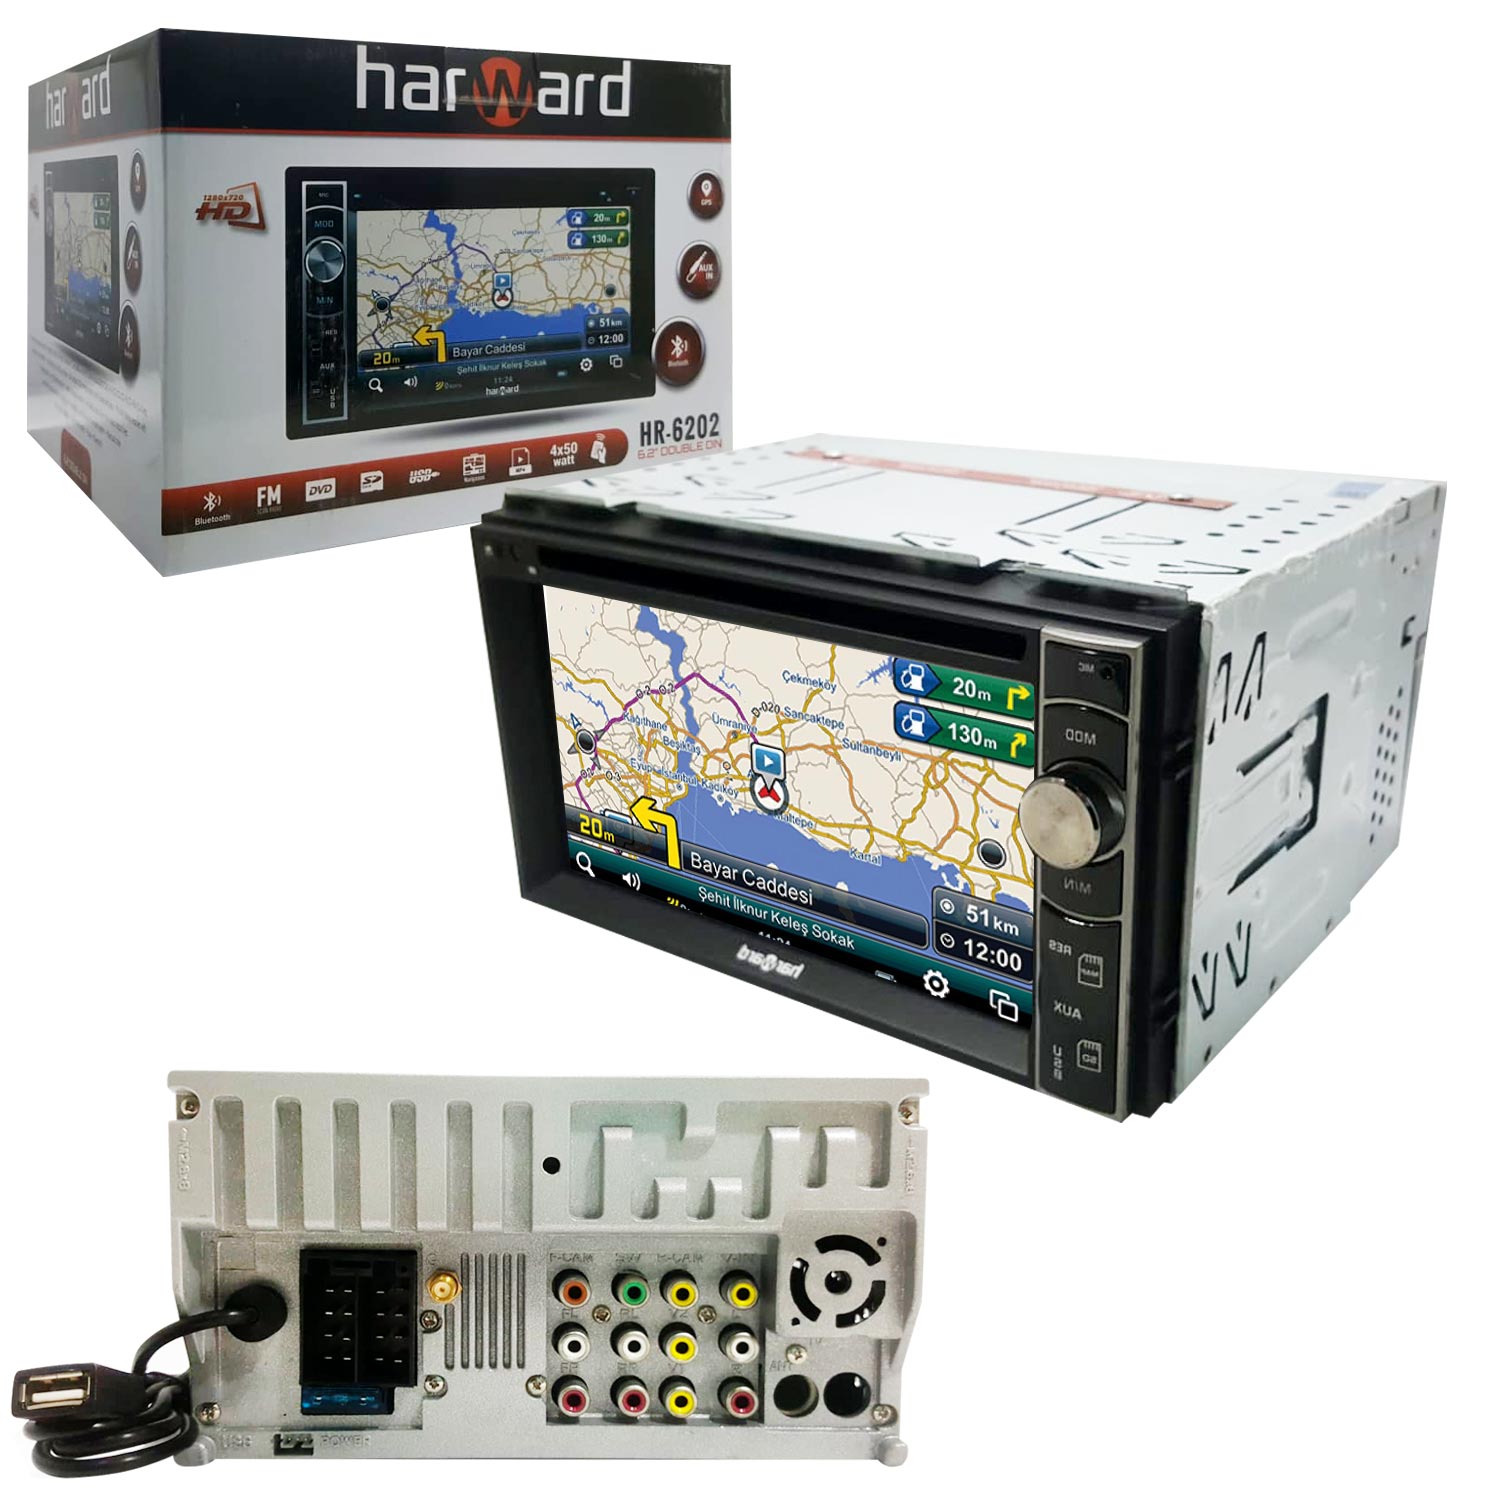 DOUBLE TEYP 6.2 4X50W GPS/DVD/BT/USB/SD/FM/AUX KAMERALI HARWARD HR-6202